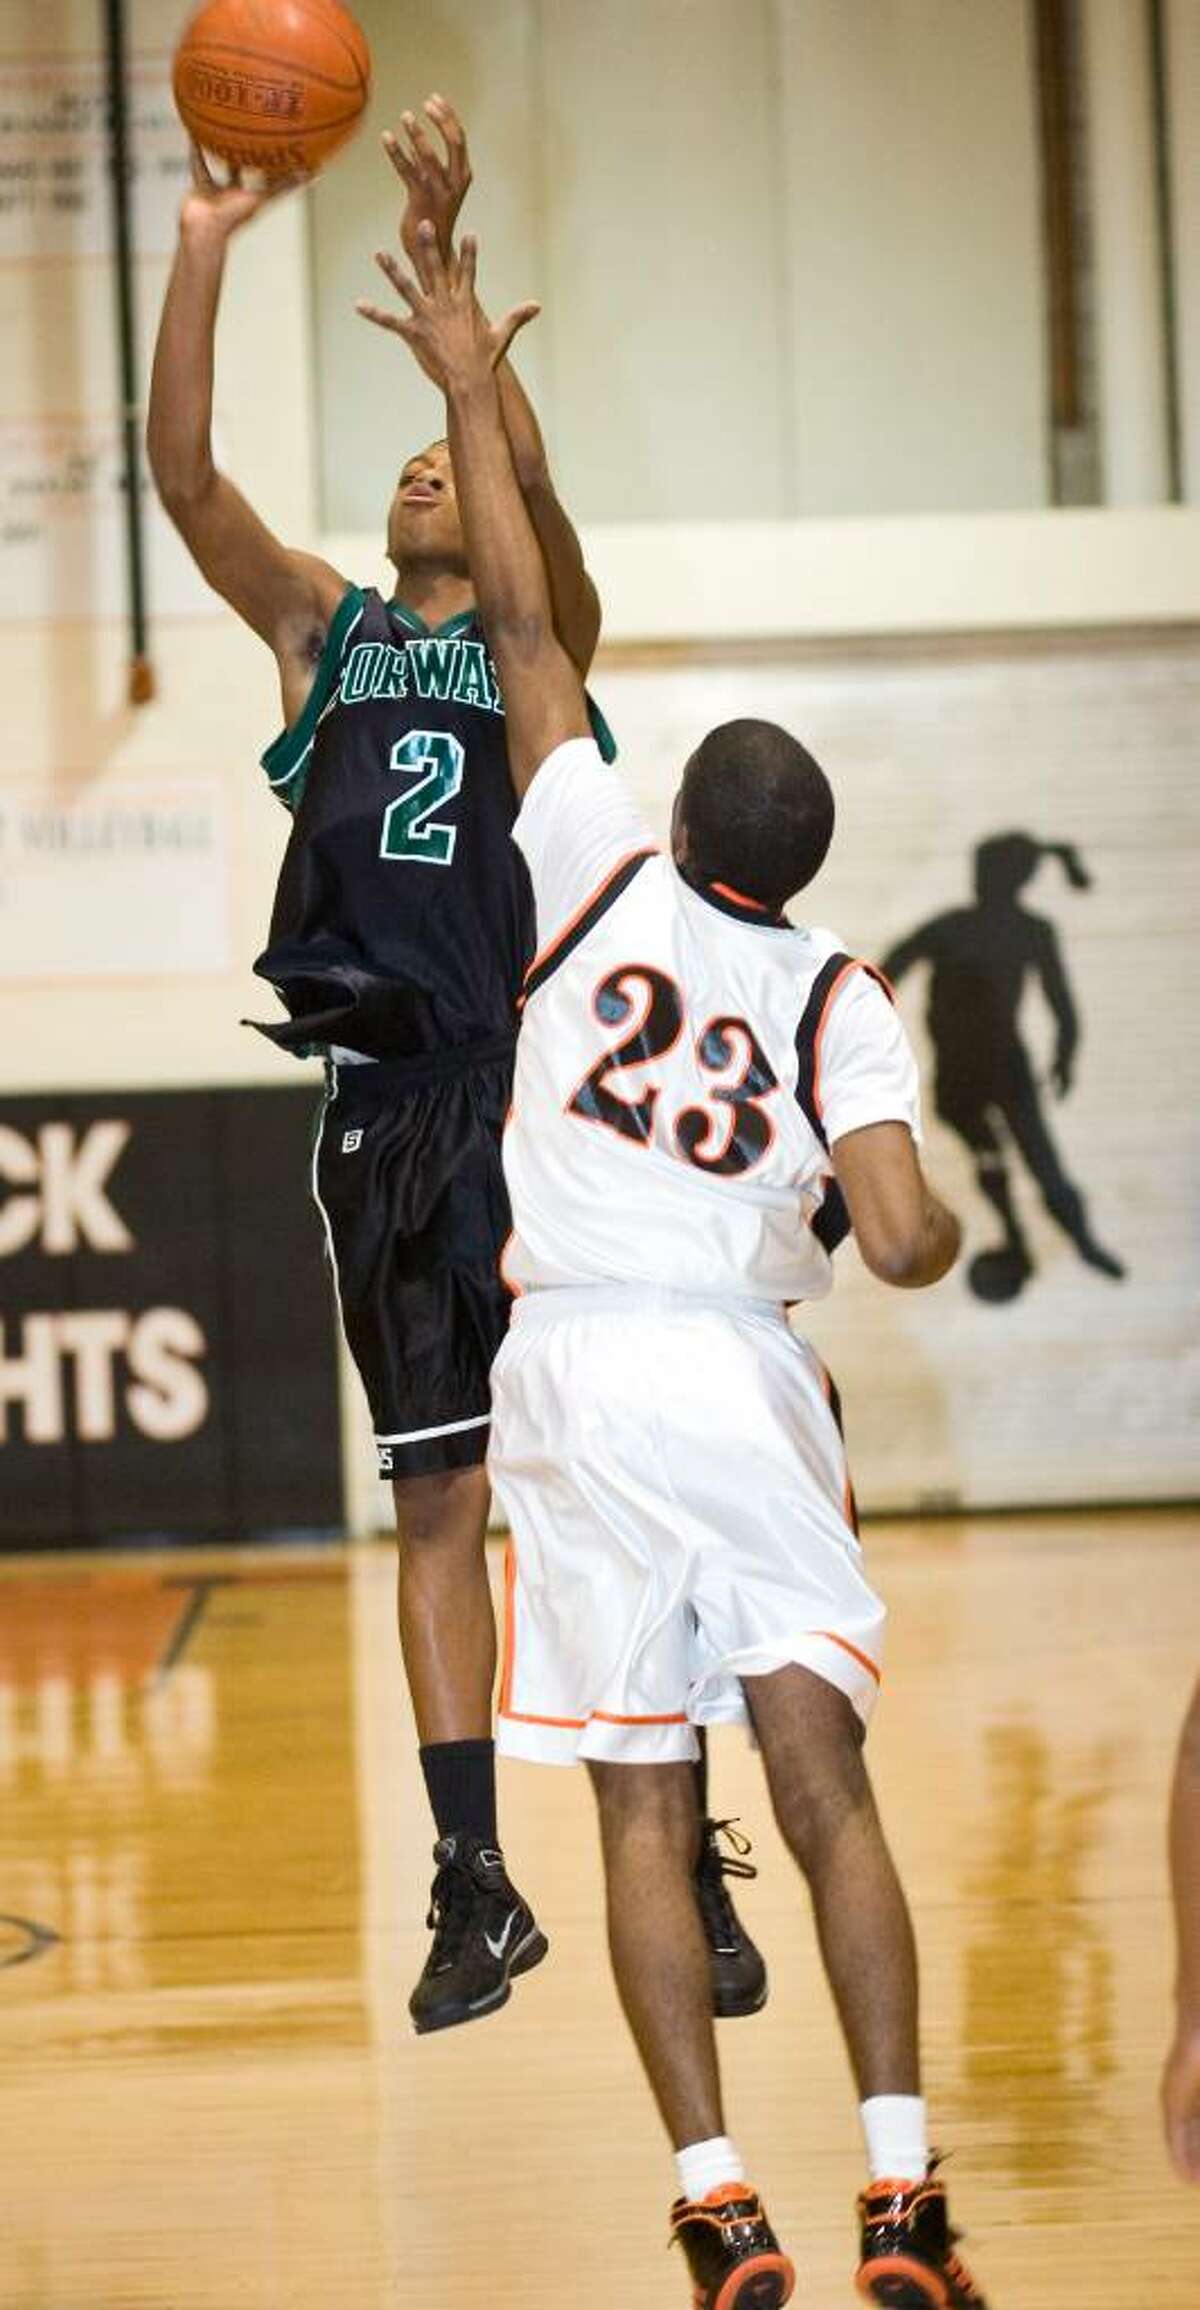 Stamford High School plays Norwalk High School in Stamford in boys basketball.